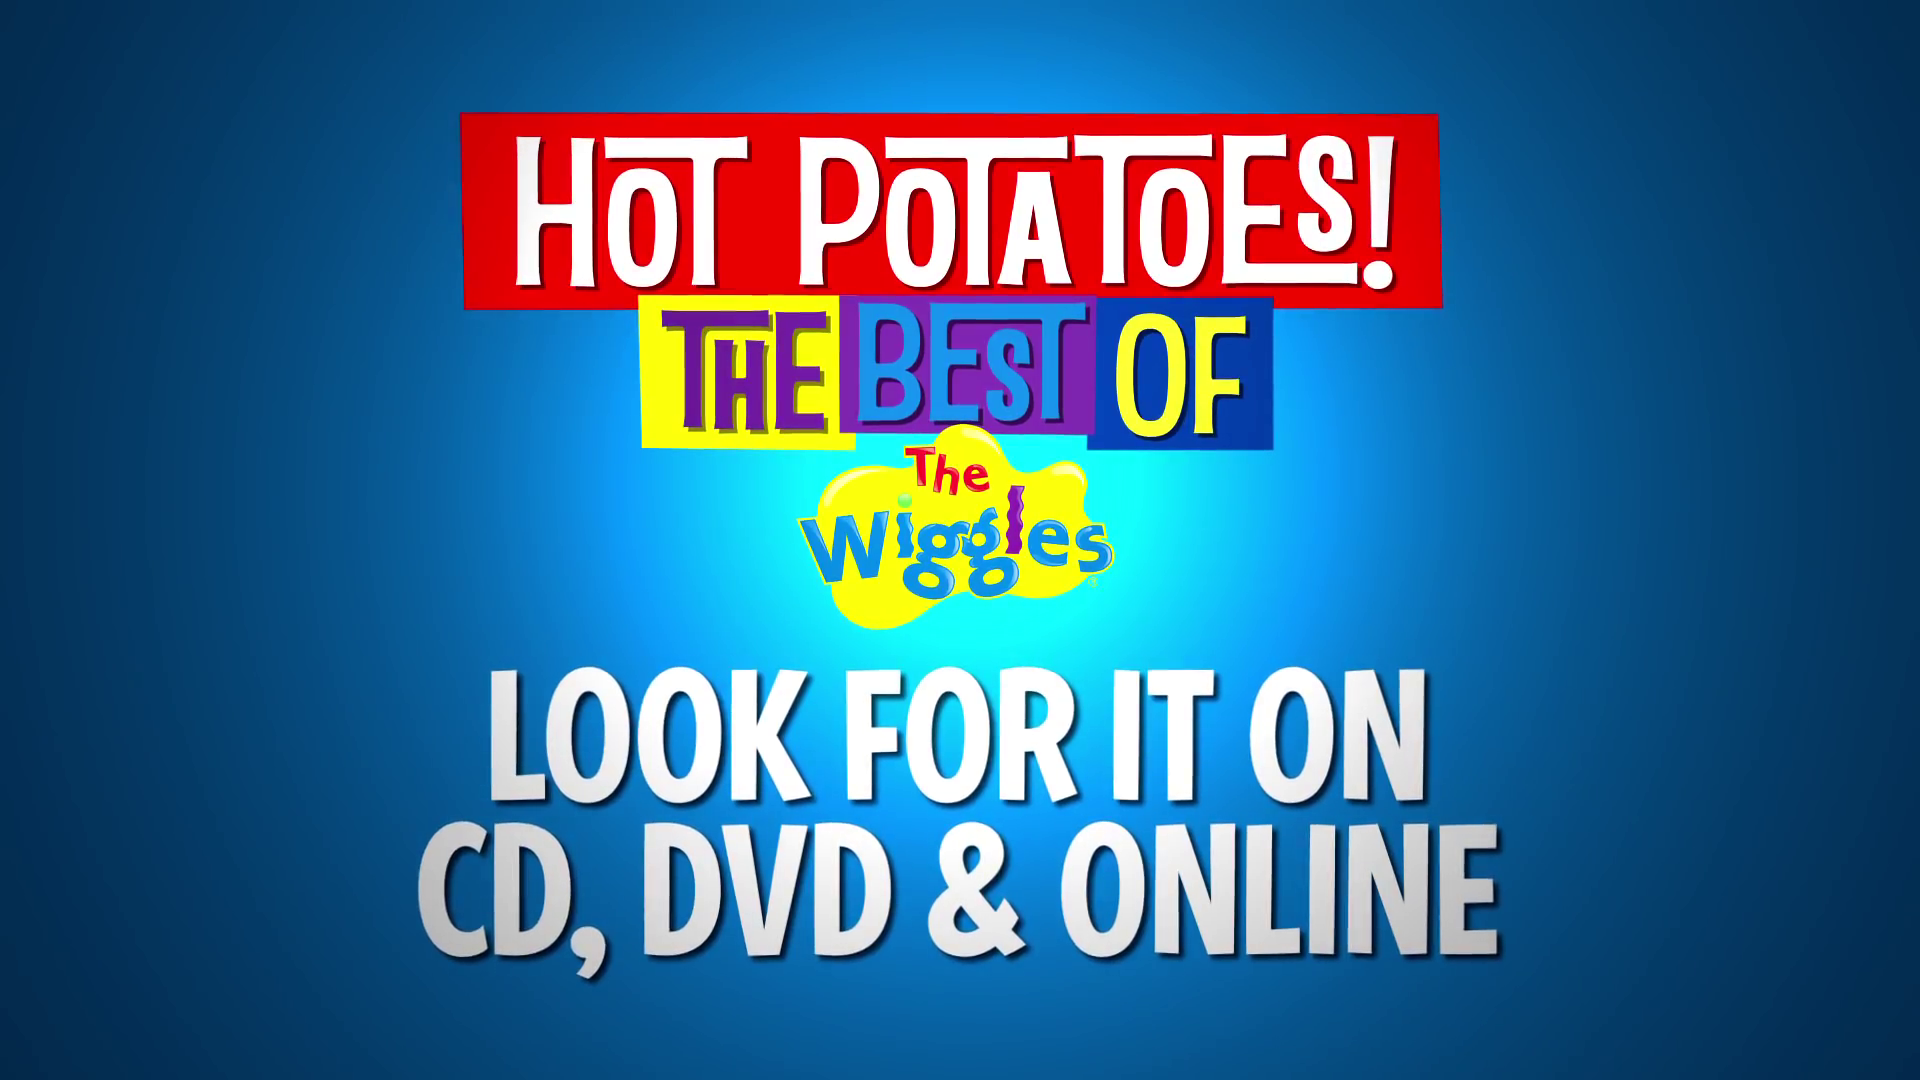 Hot Potato! The Best Of The OG Wiggles - JB Hi-Fi